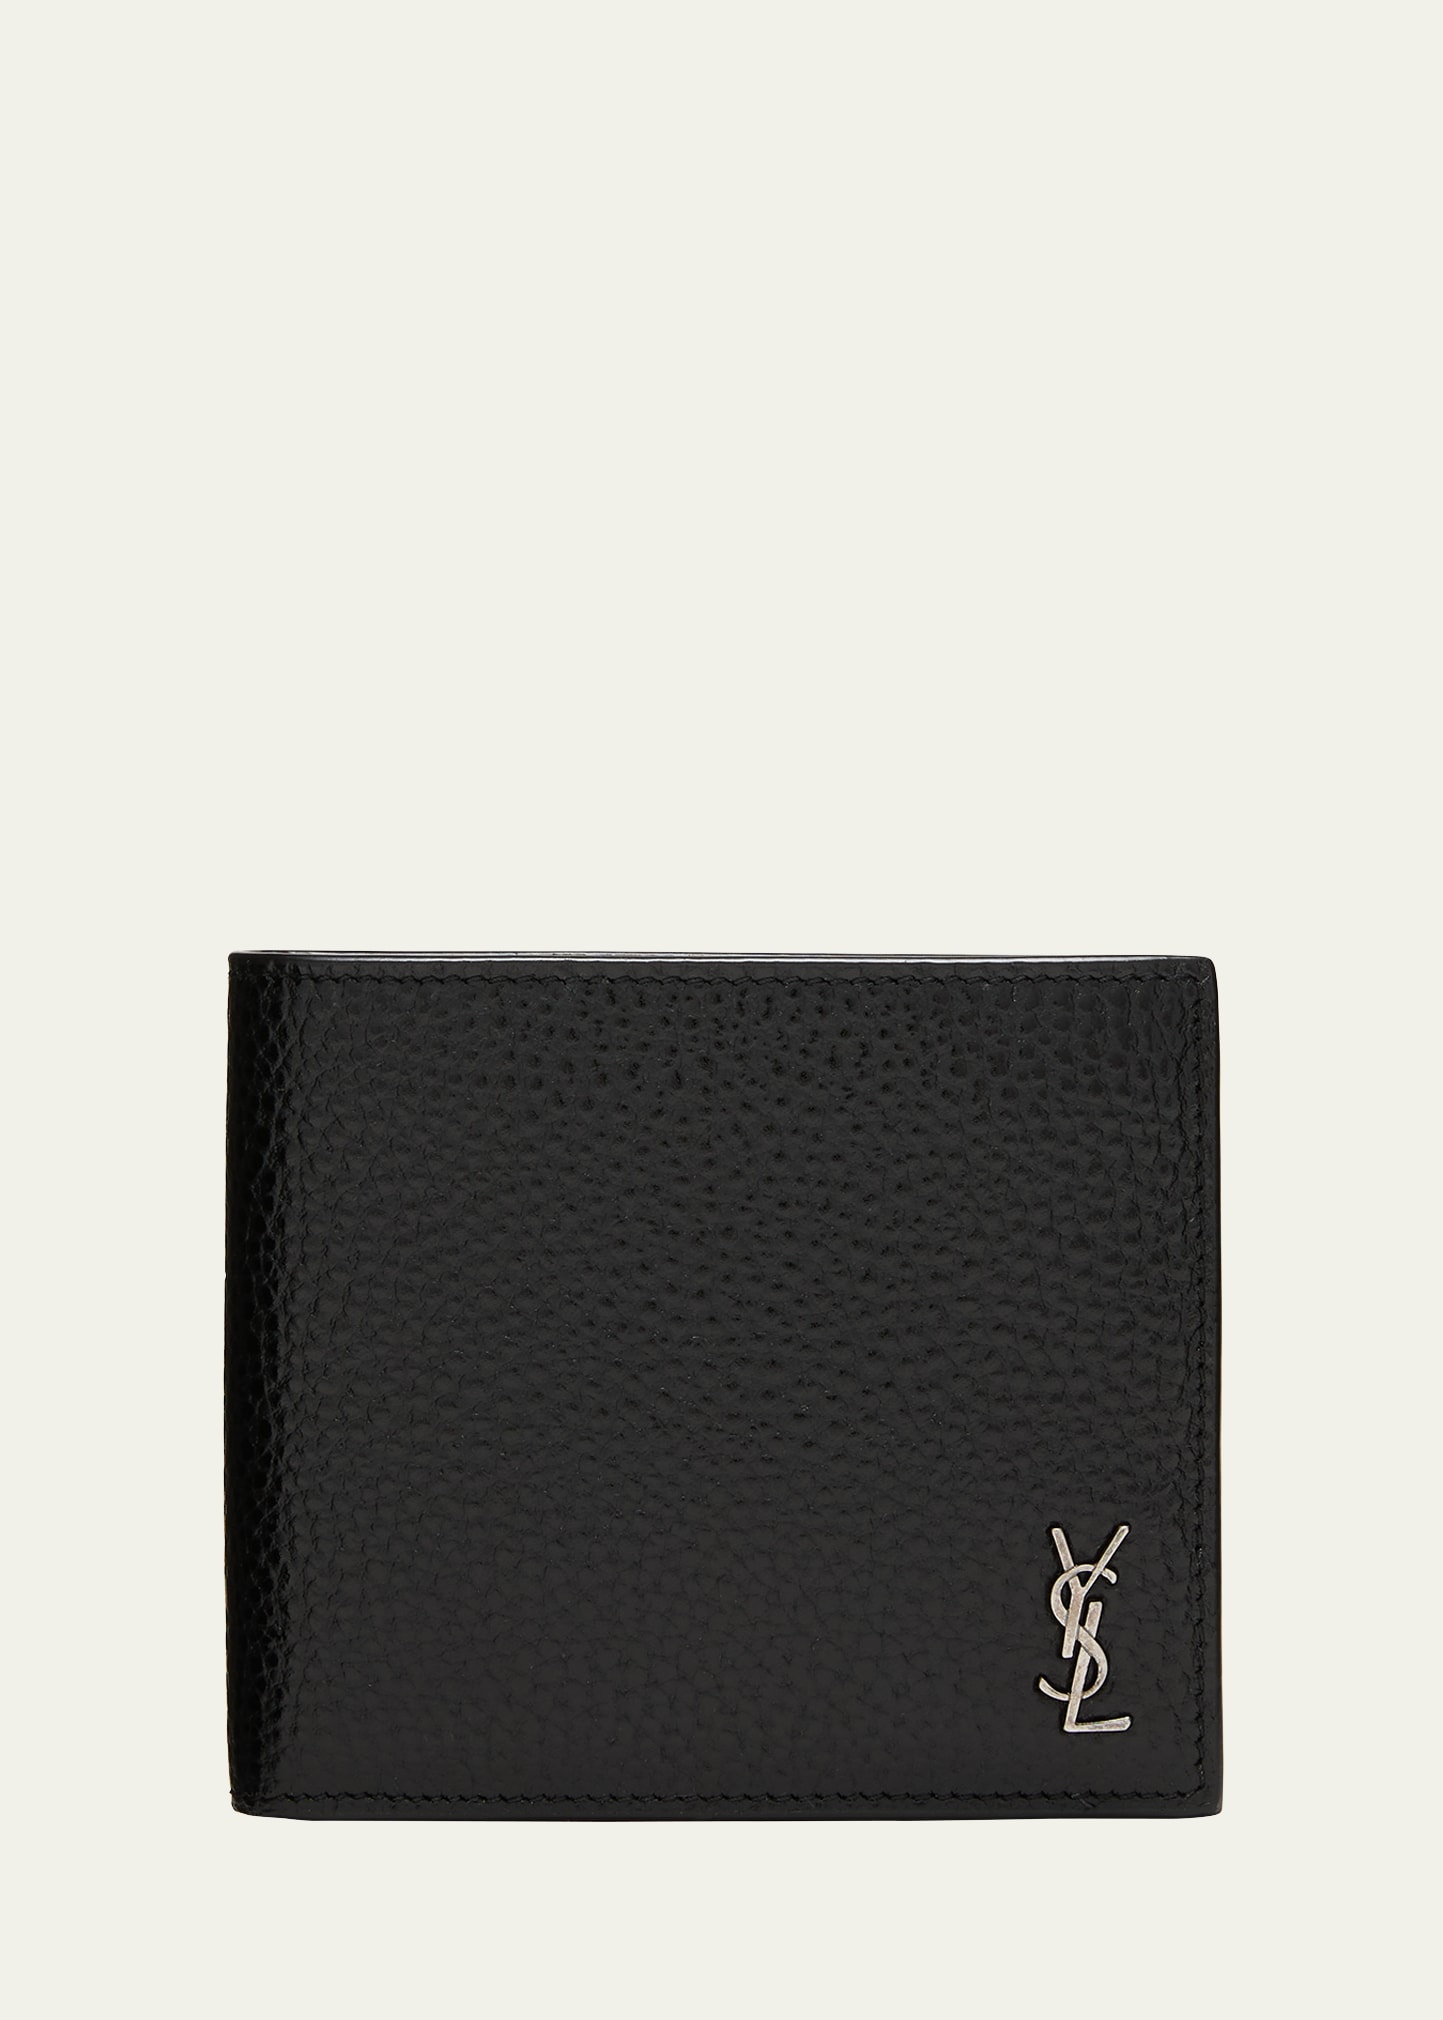 Saint Laurent Men's Ysl Pebbled Leather Wallet In Nero